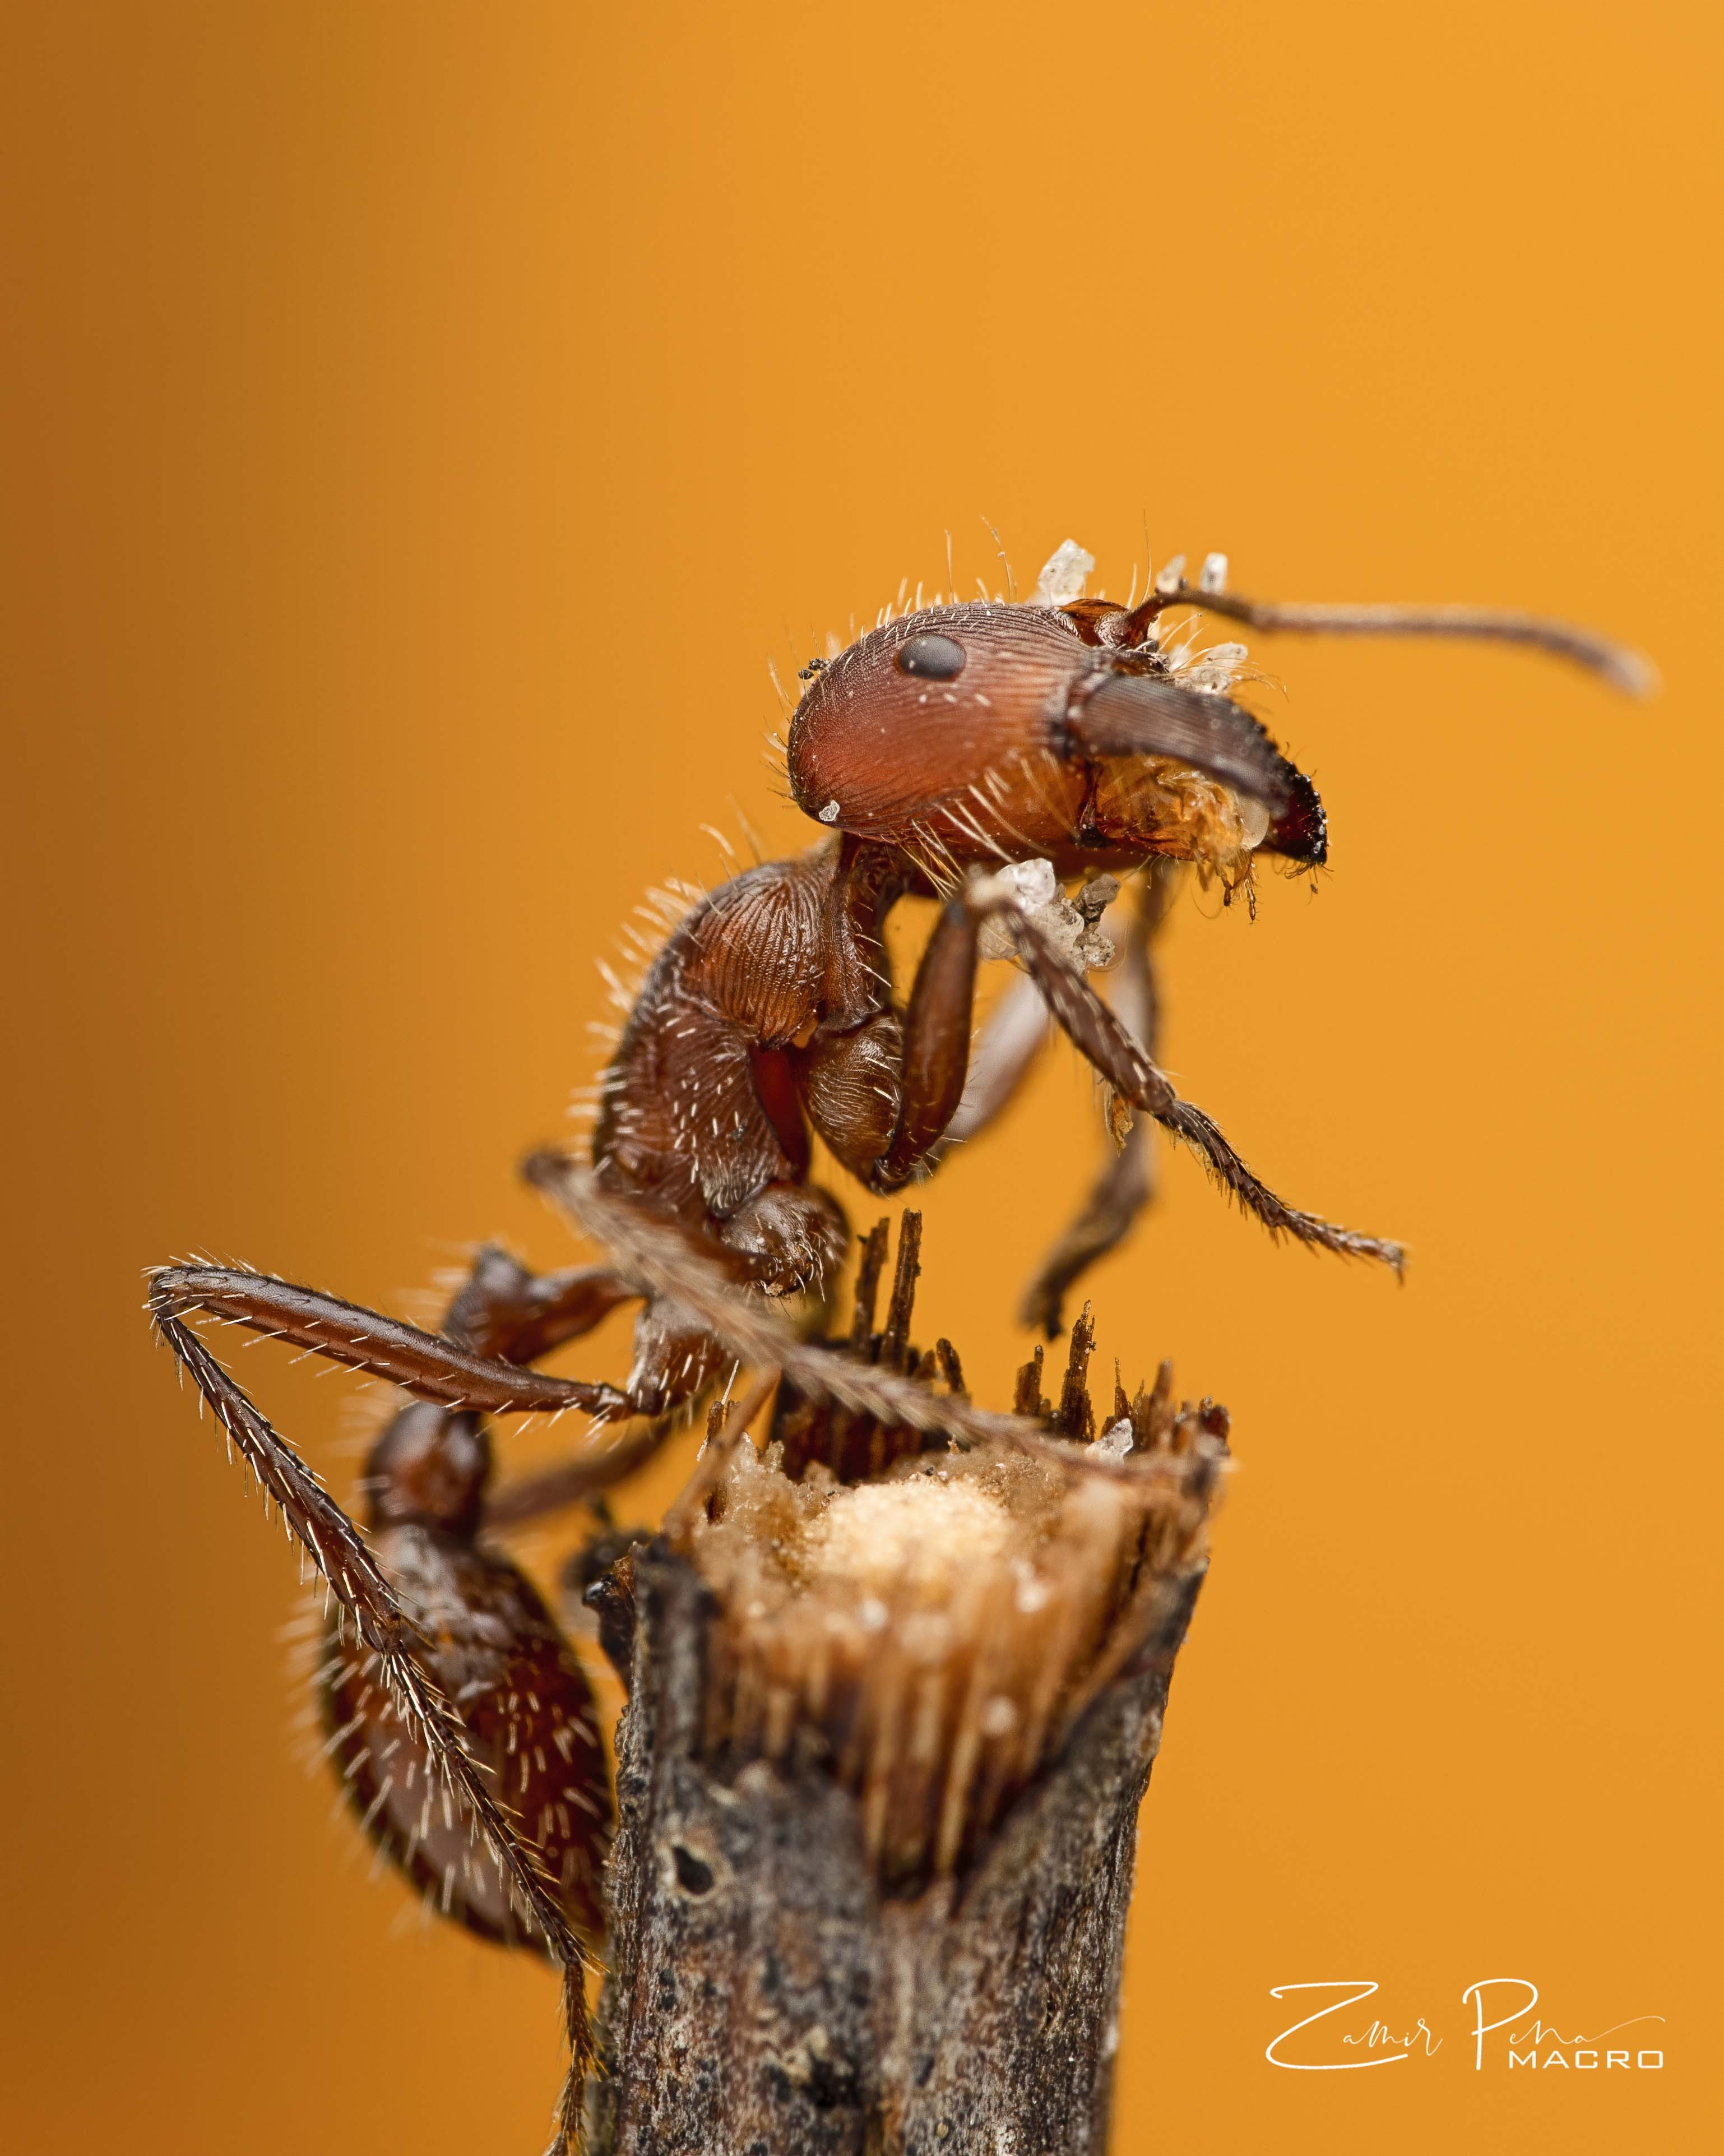 Ant edition 1